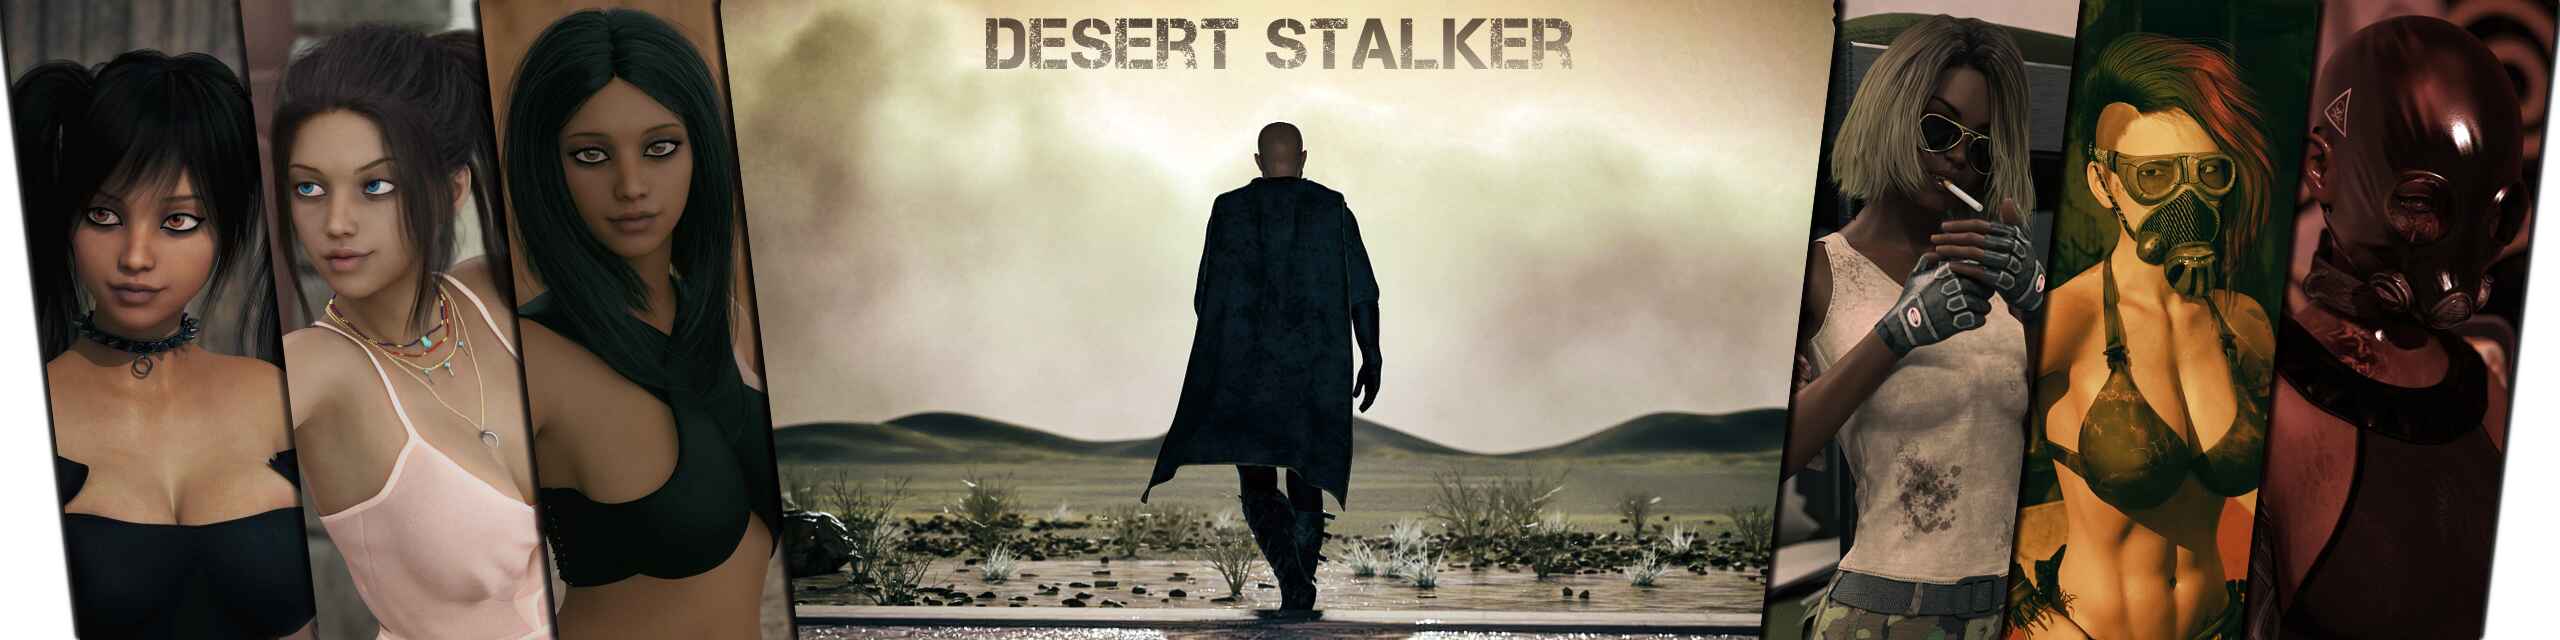 Desert stalker download